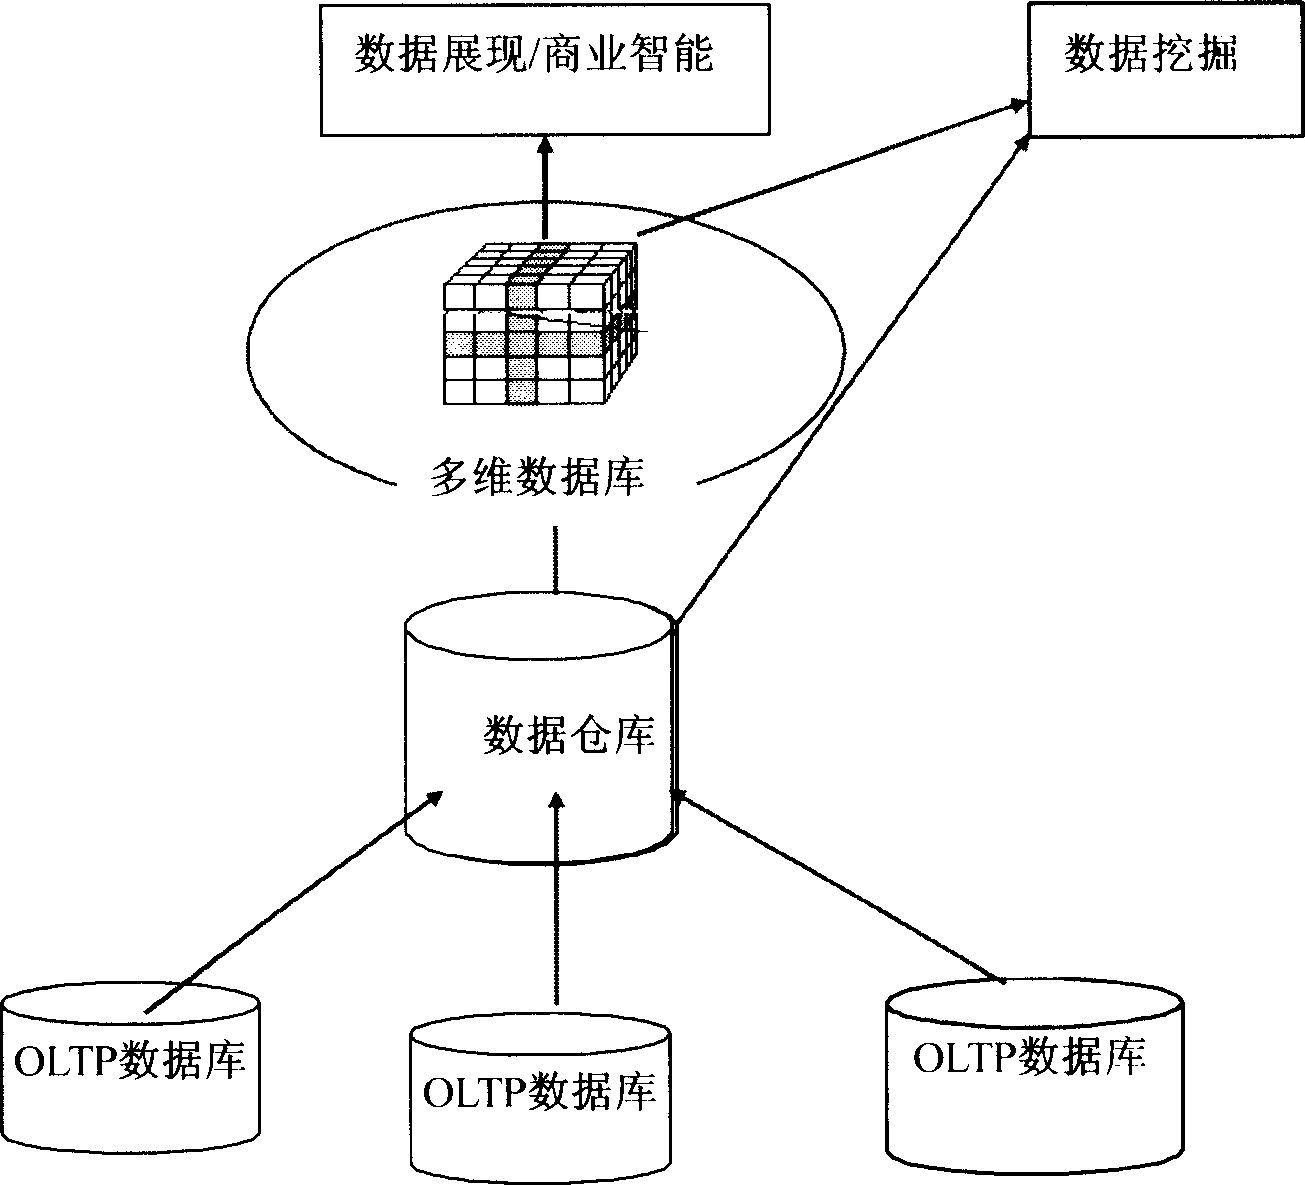 Computer managing system for large scale telecommunication enterprise